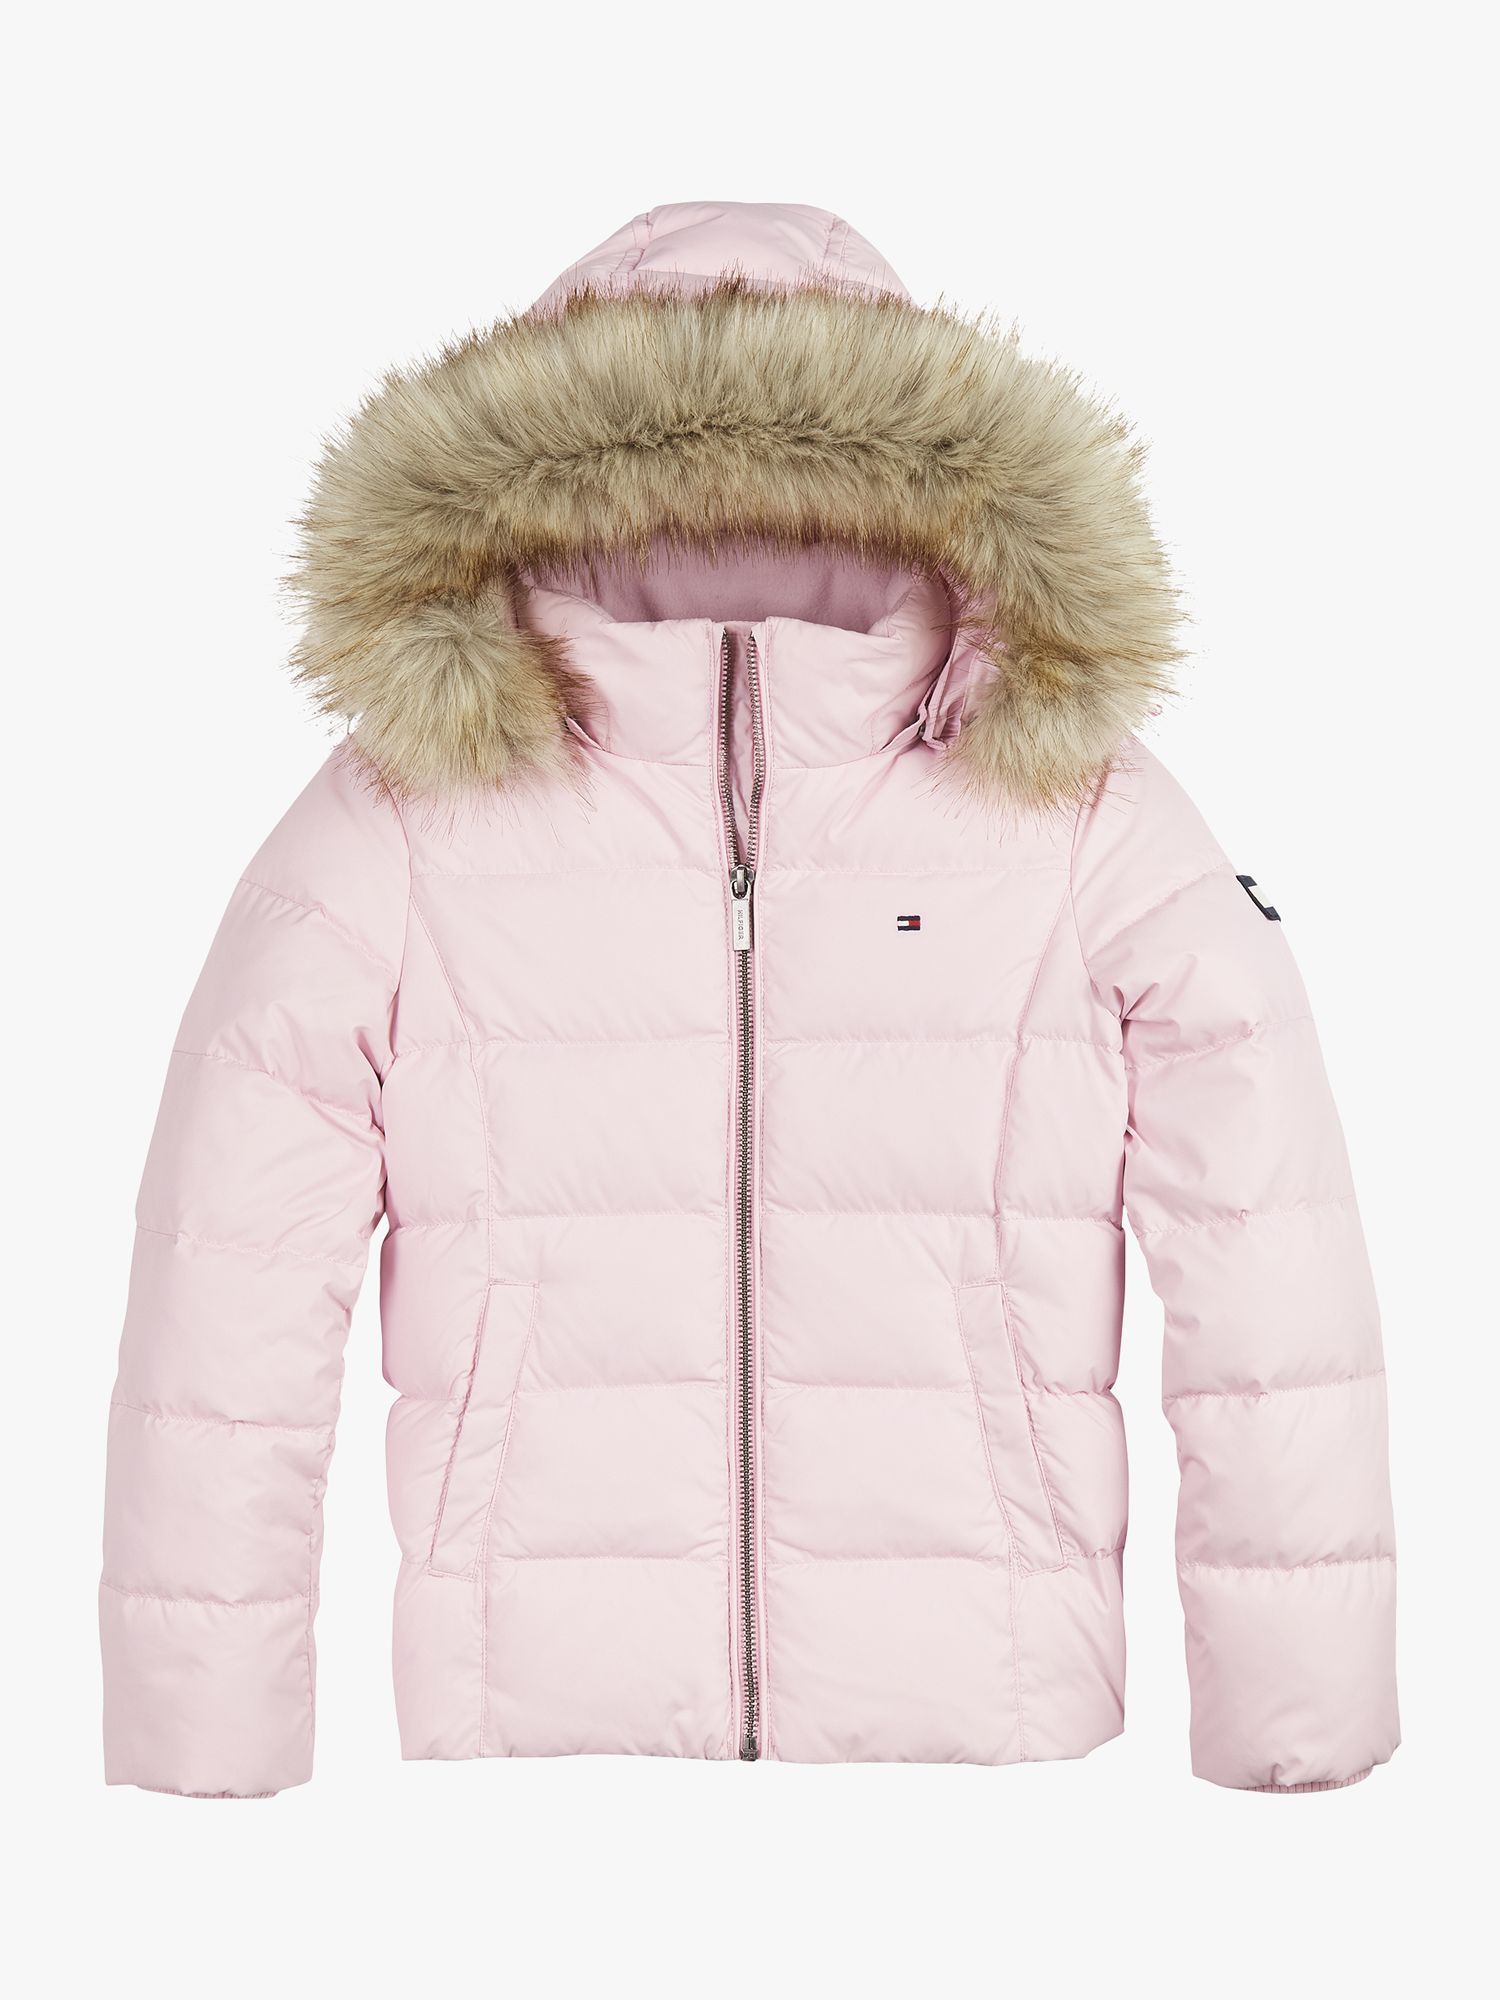 Tommy Hilfiger Girls' Essential Jacket, Pink at John Lewis & Partners